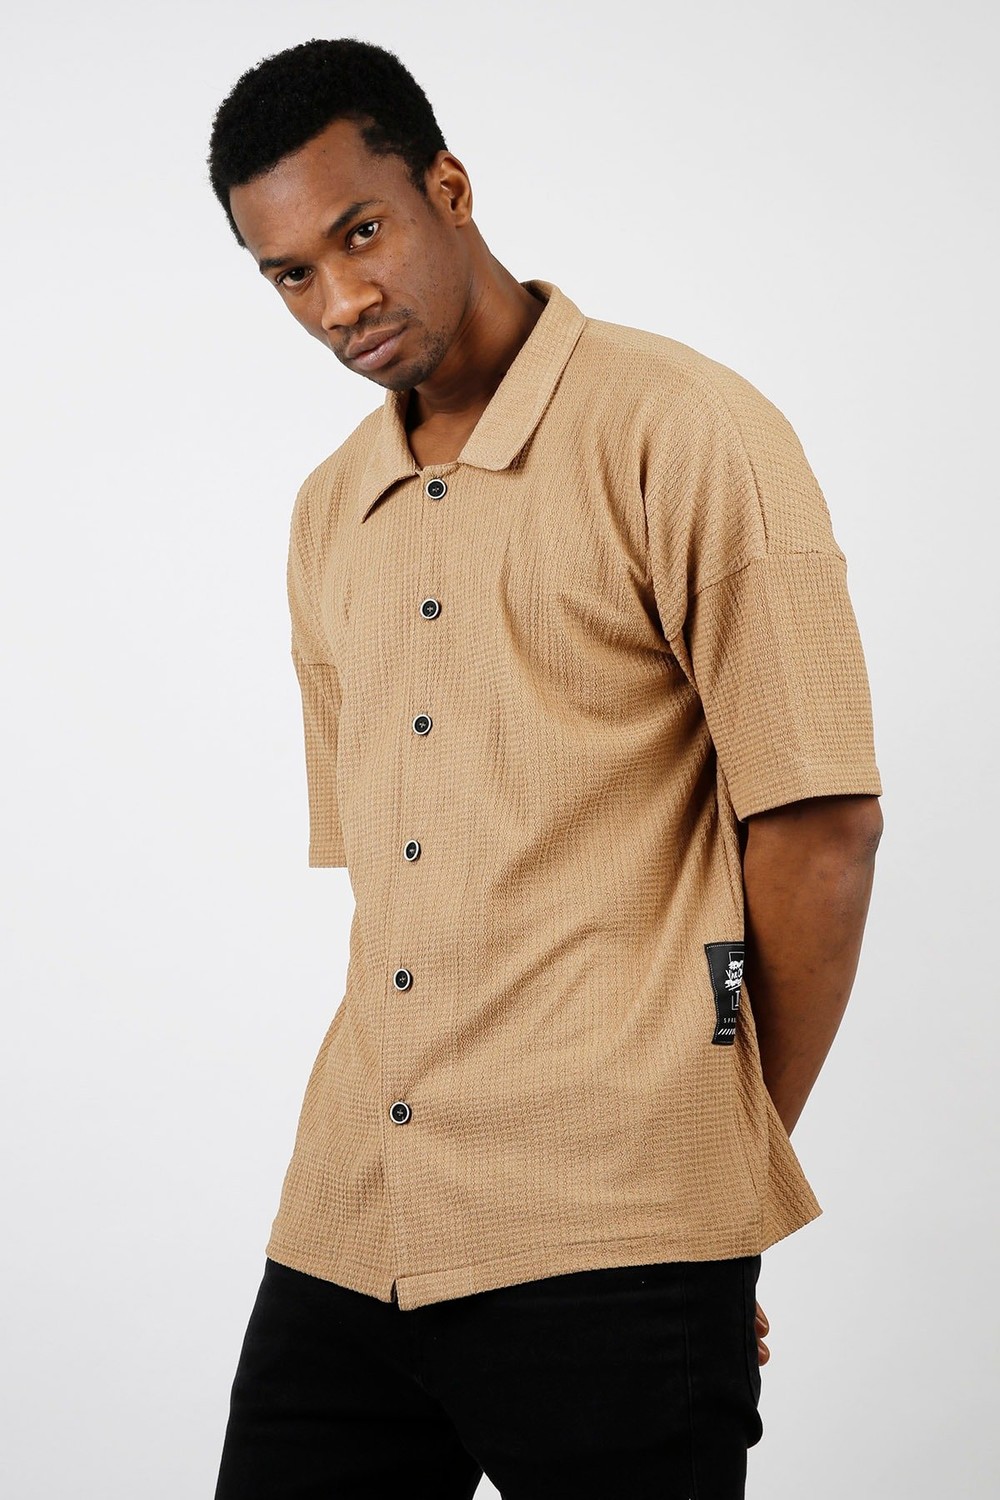 XHAN Men's Beige Loose Short Sleeve Shirt 1x2-44733-25